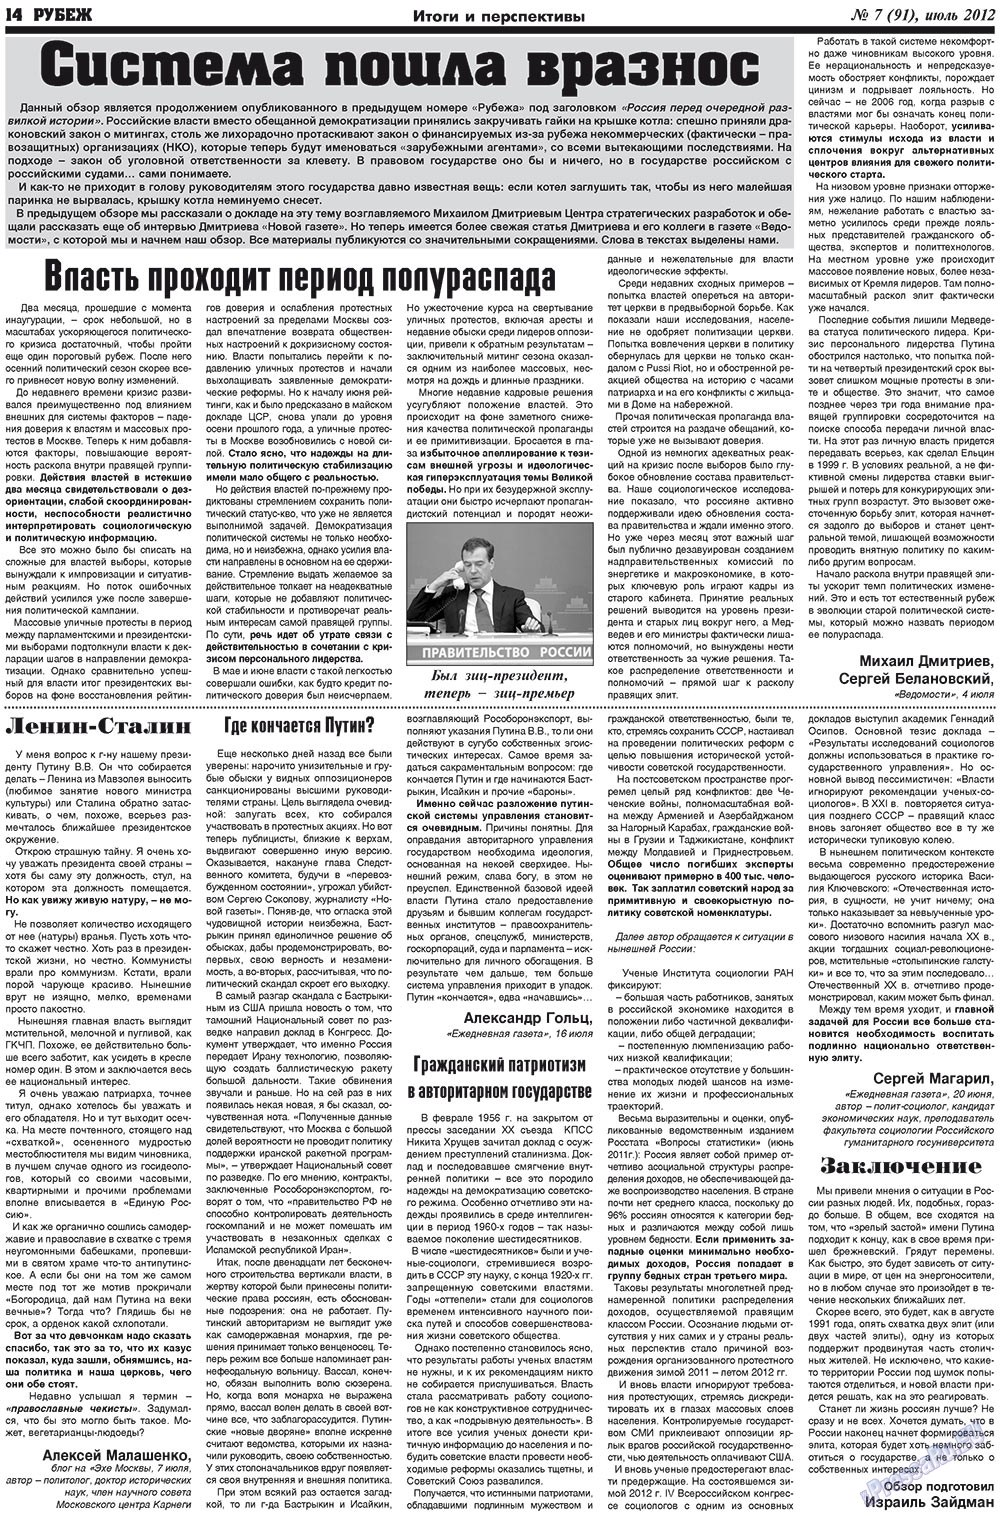 Рубеж, газета. 2012 №7 стр.14